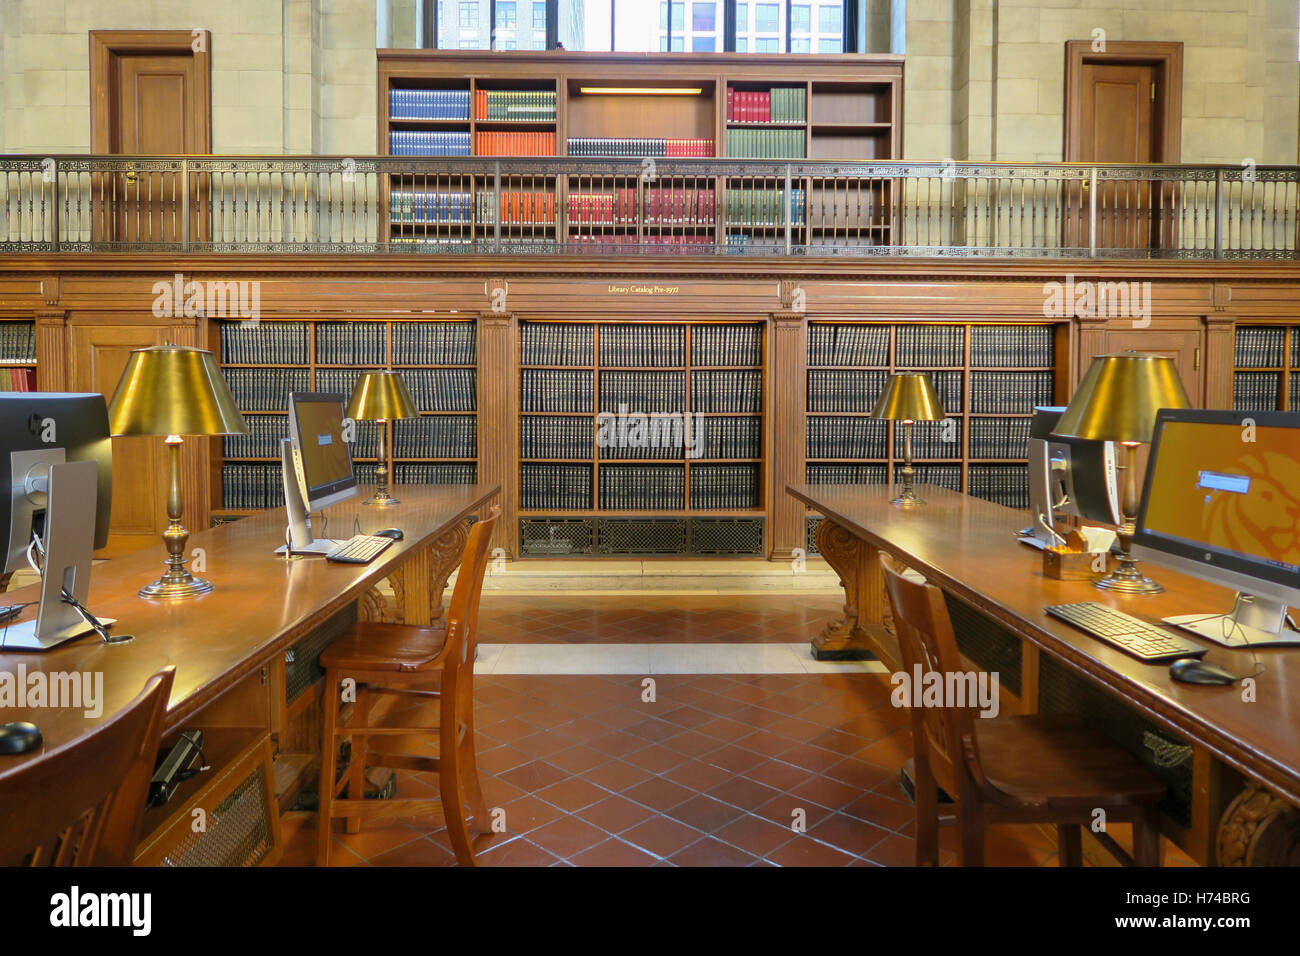 Bill Blass Public Catalog Room, New York Public Library, NYC Stock ...